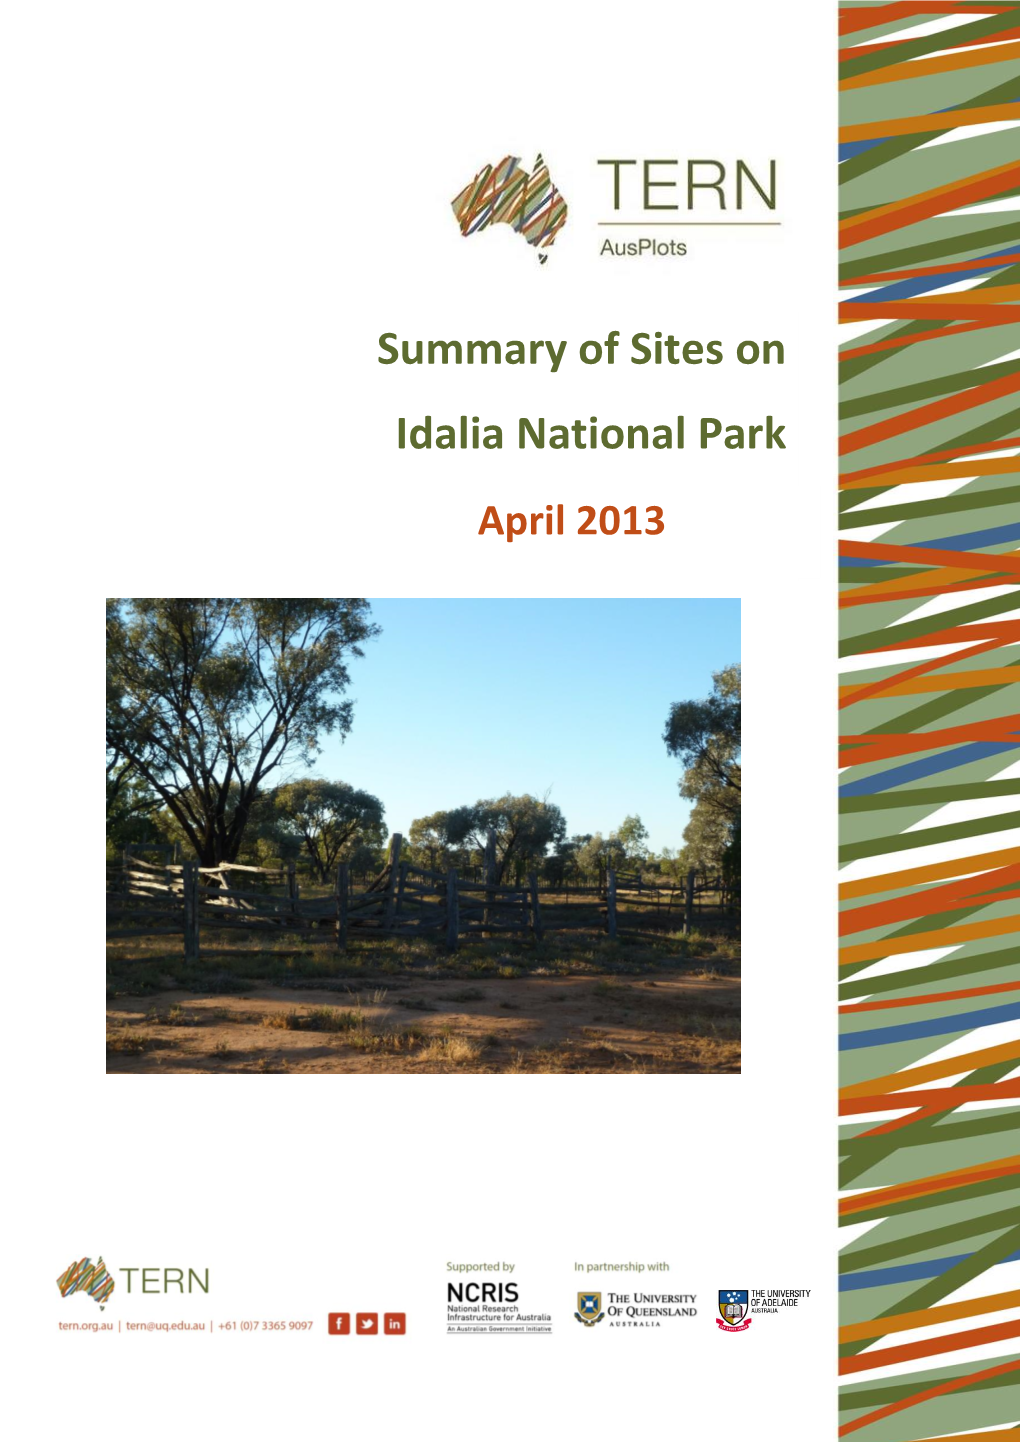 Summary of Sites on Idalia National Park